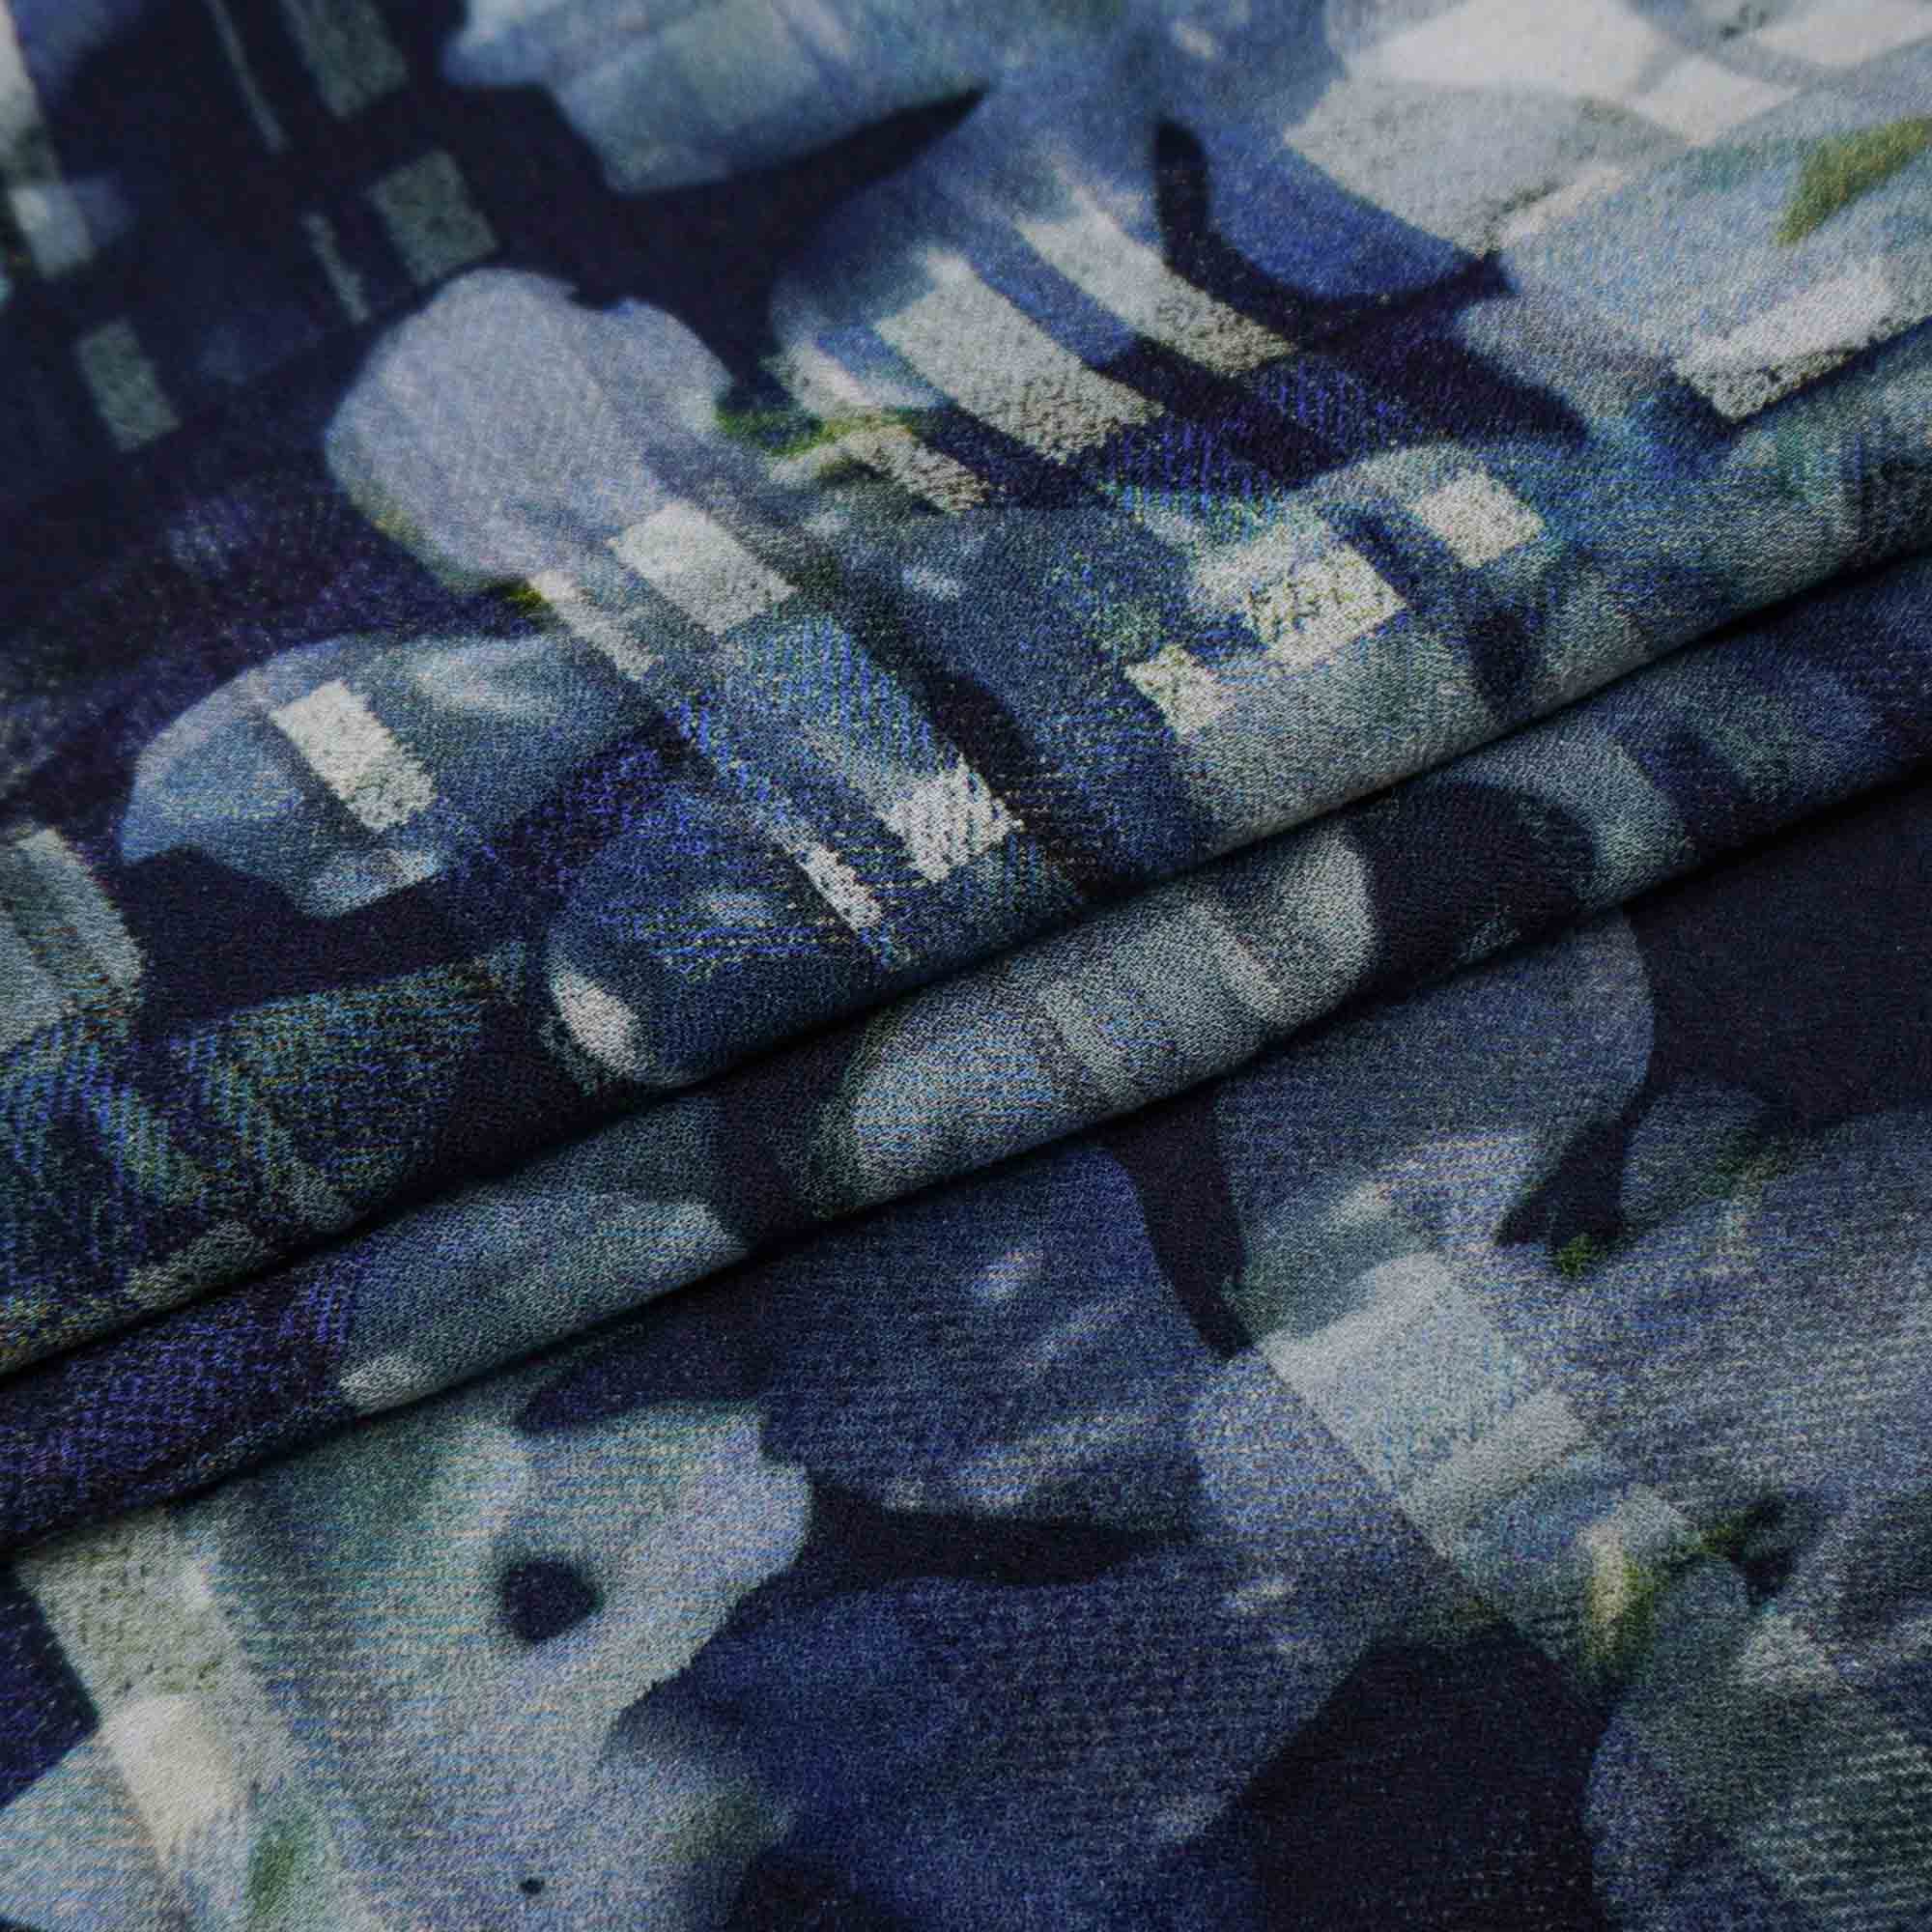 Tecido viscose azul marinho estampado xadrez/floral (tecido italiano legítimo)